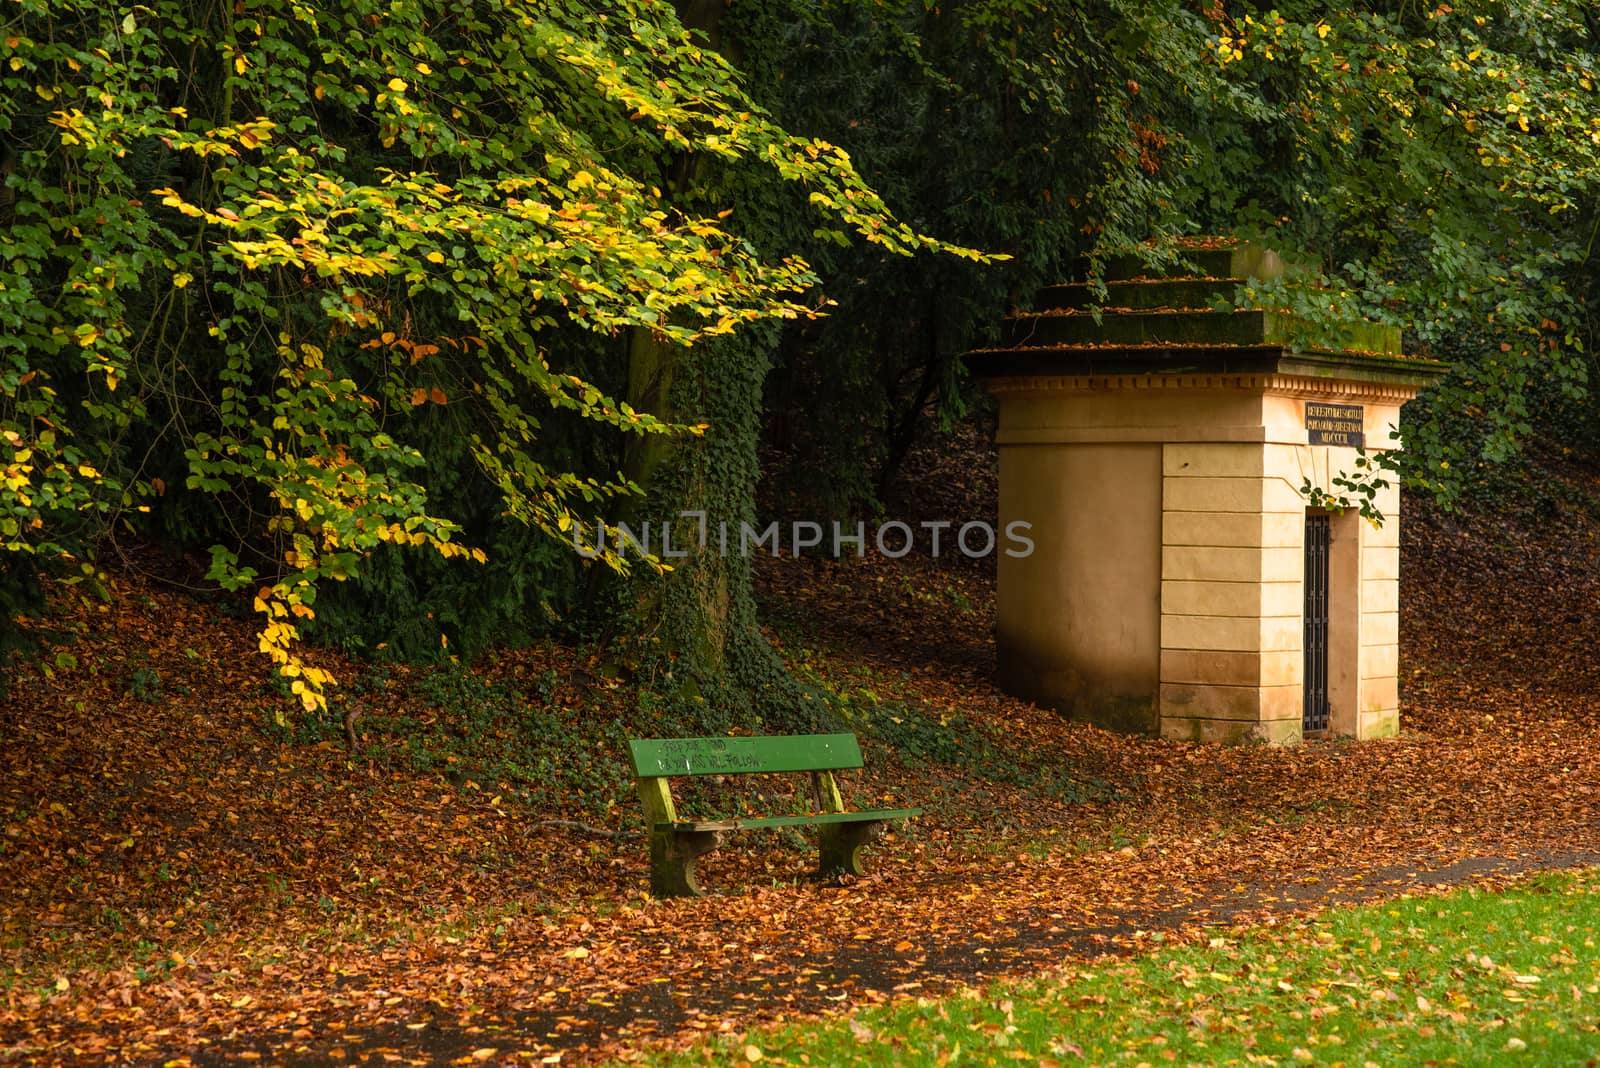 Empty chair at Park Stromovka in Prague 6 under a tree in Autumn season